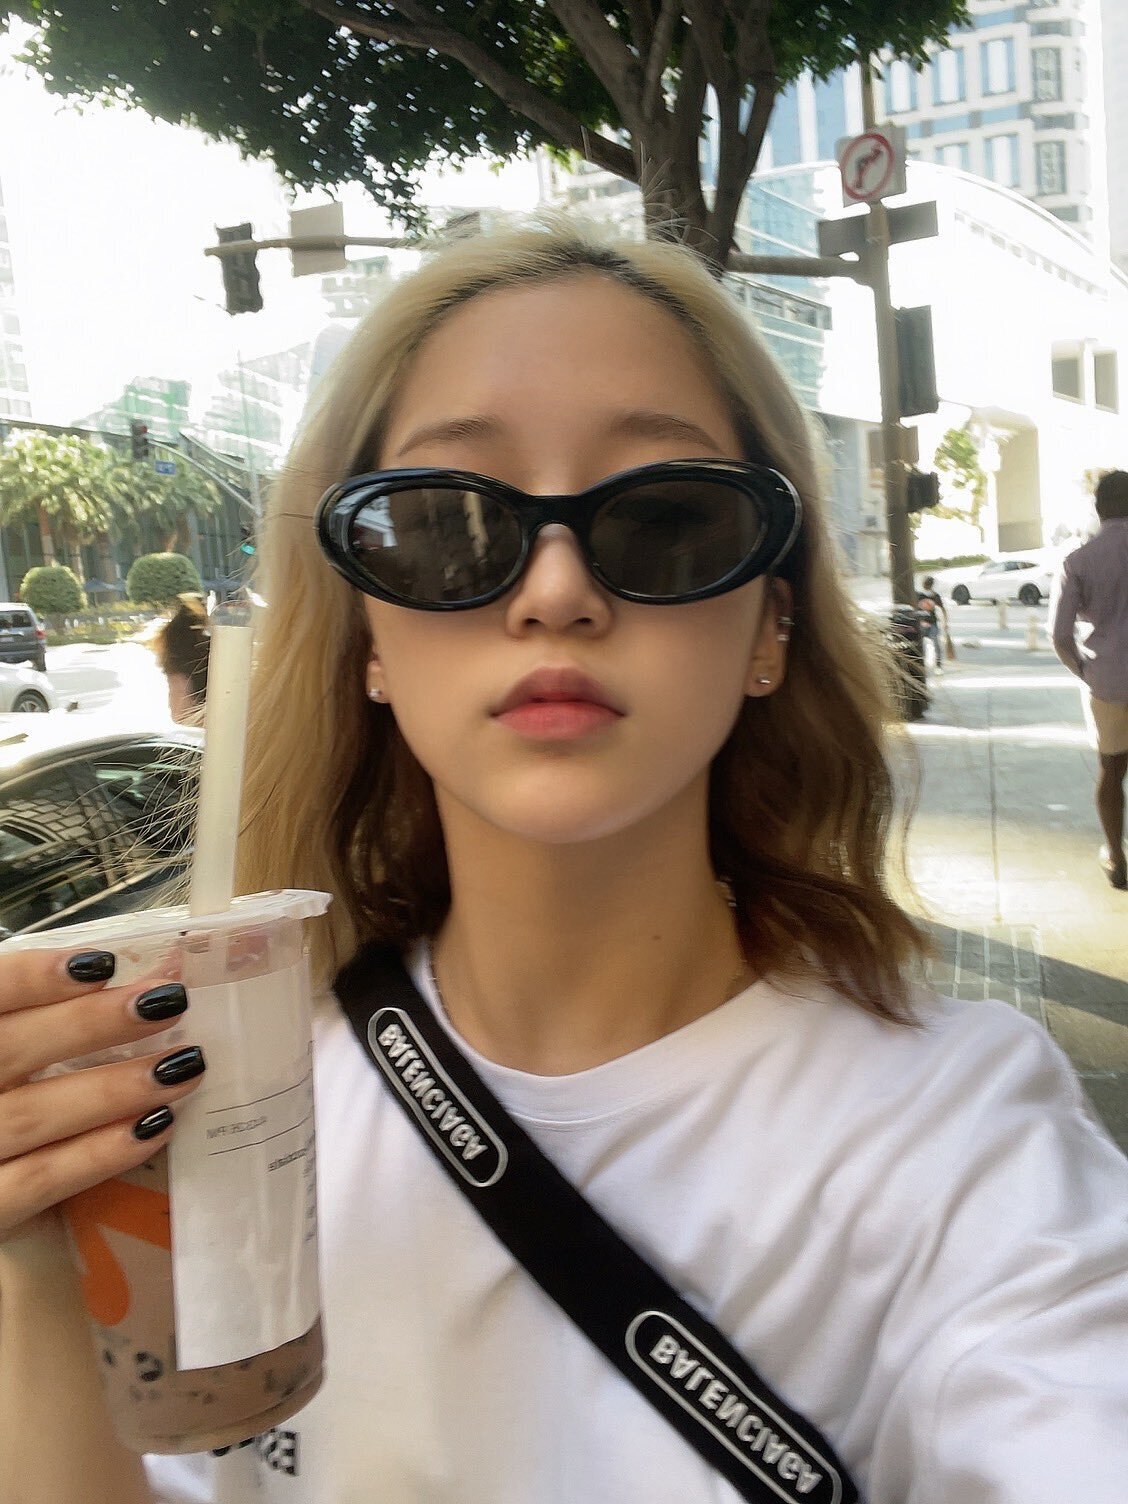 220108 Kep1er Twitter Update - Hikaru Music Core Selfie (Main Character of  Today's Message) : r/kep1er